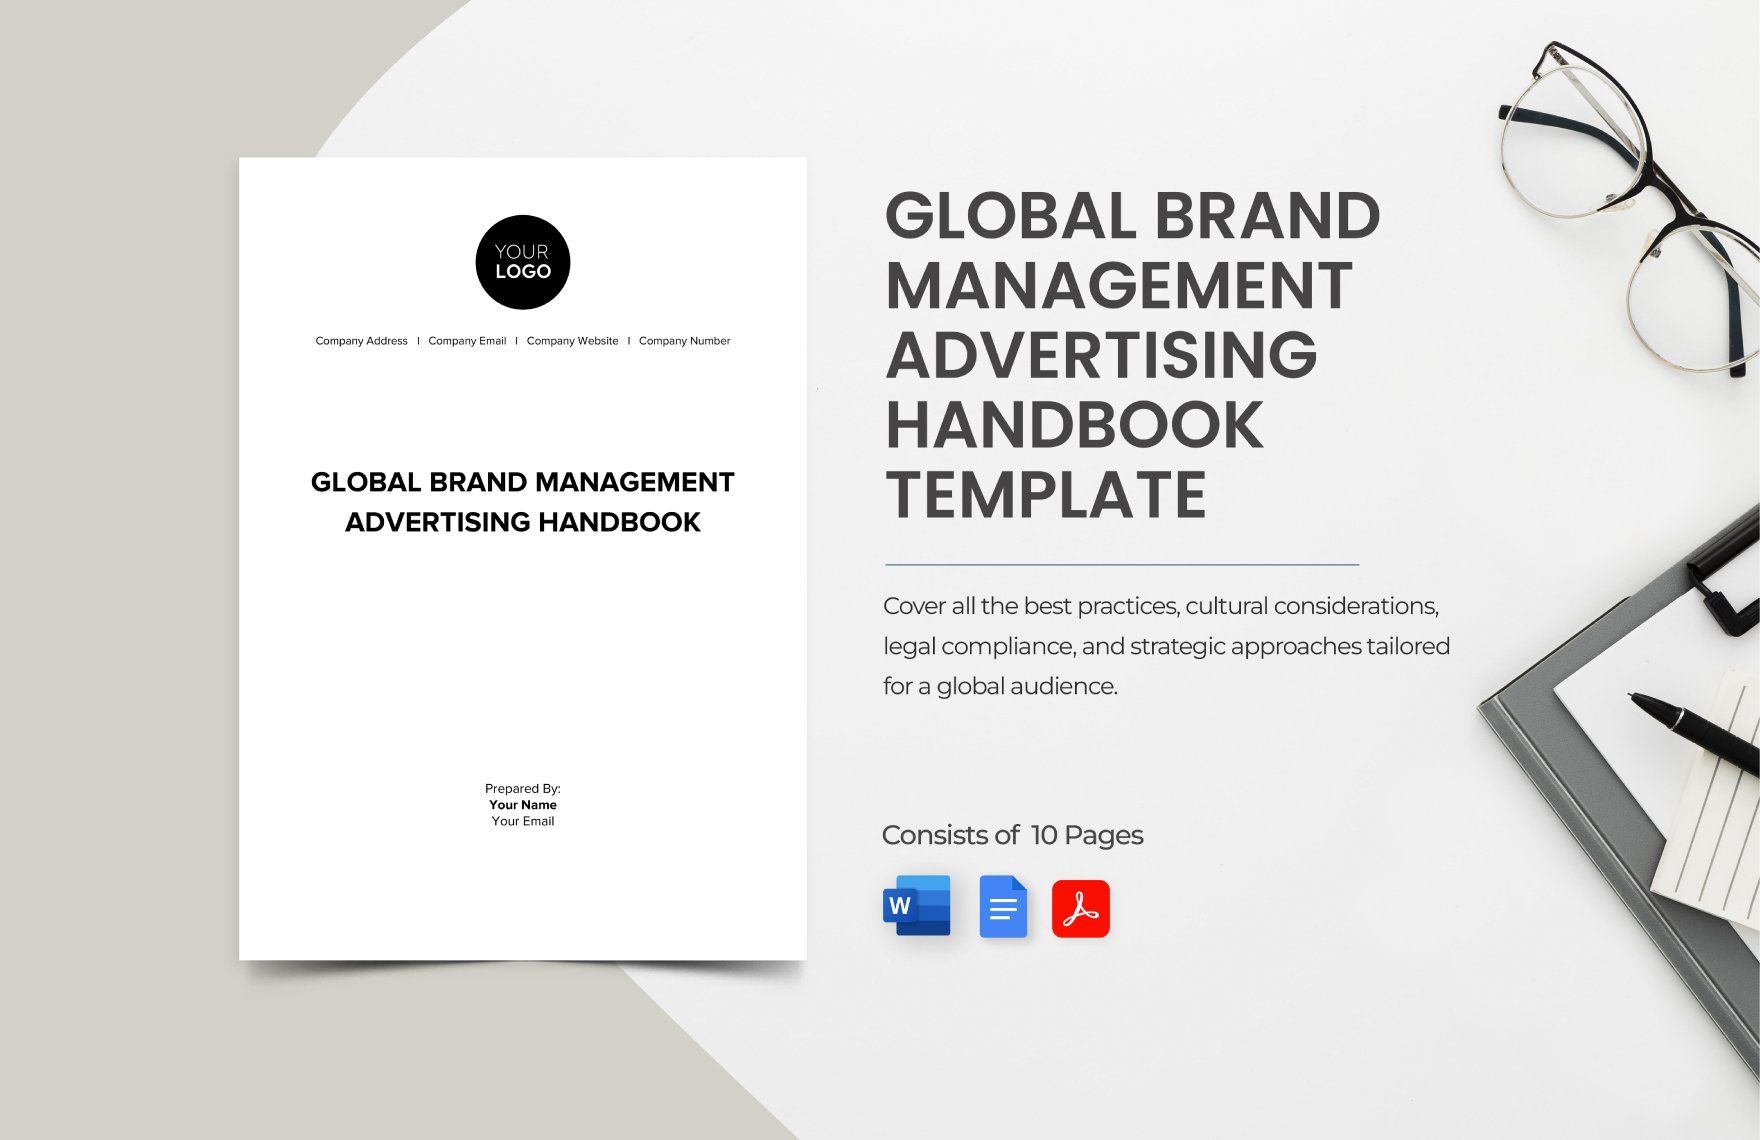 Global Brand Management Advertising Handbook Template in Word, Google Docs, PDF